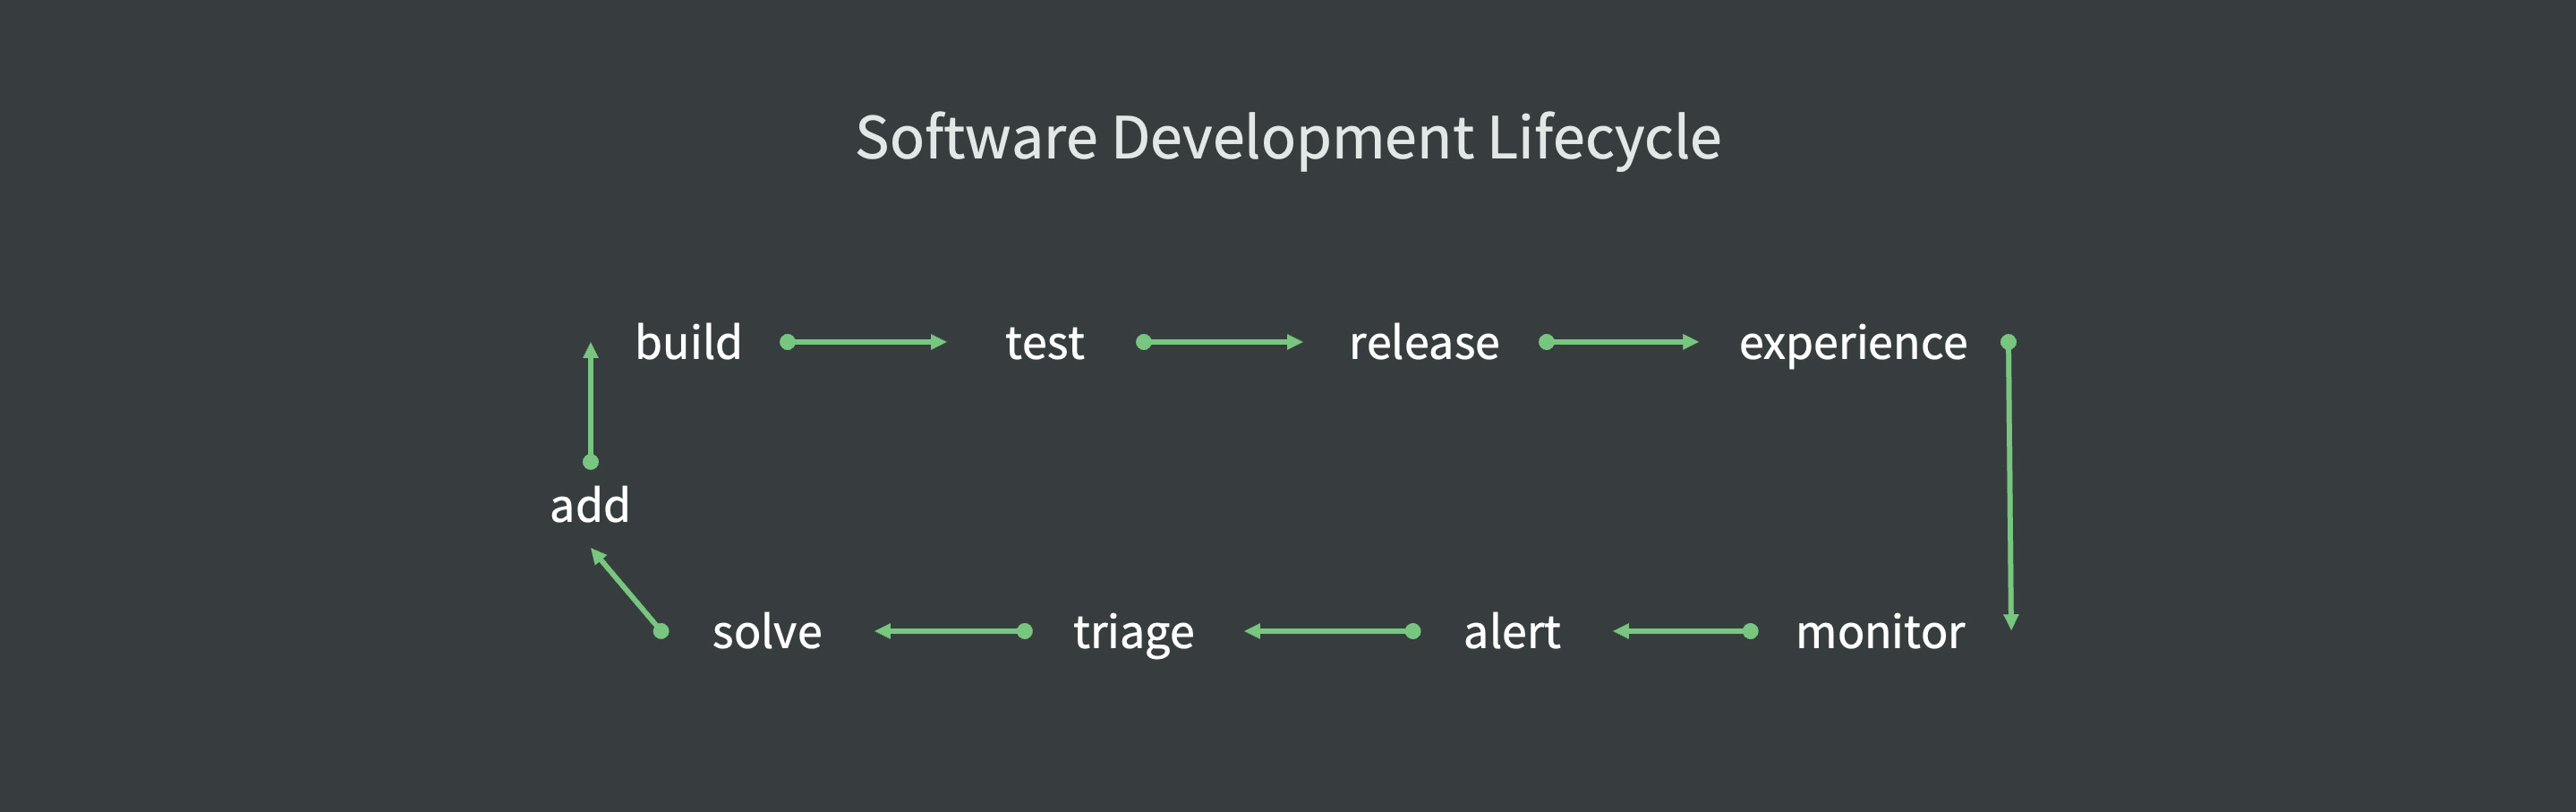 img-SoftwareDevelopment-Lifecycle